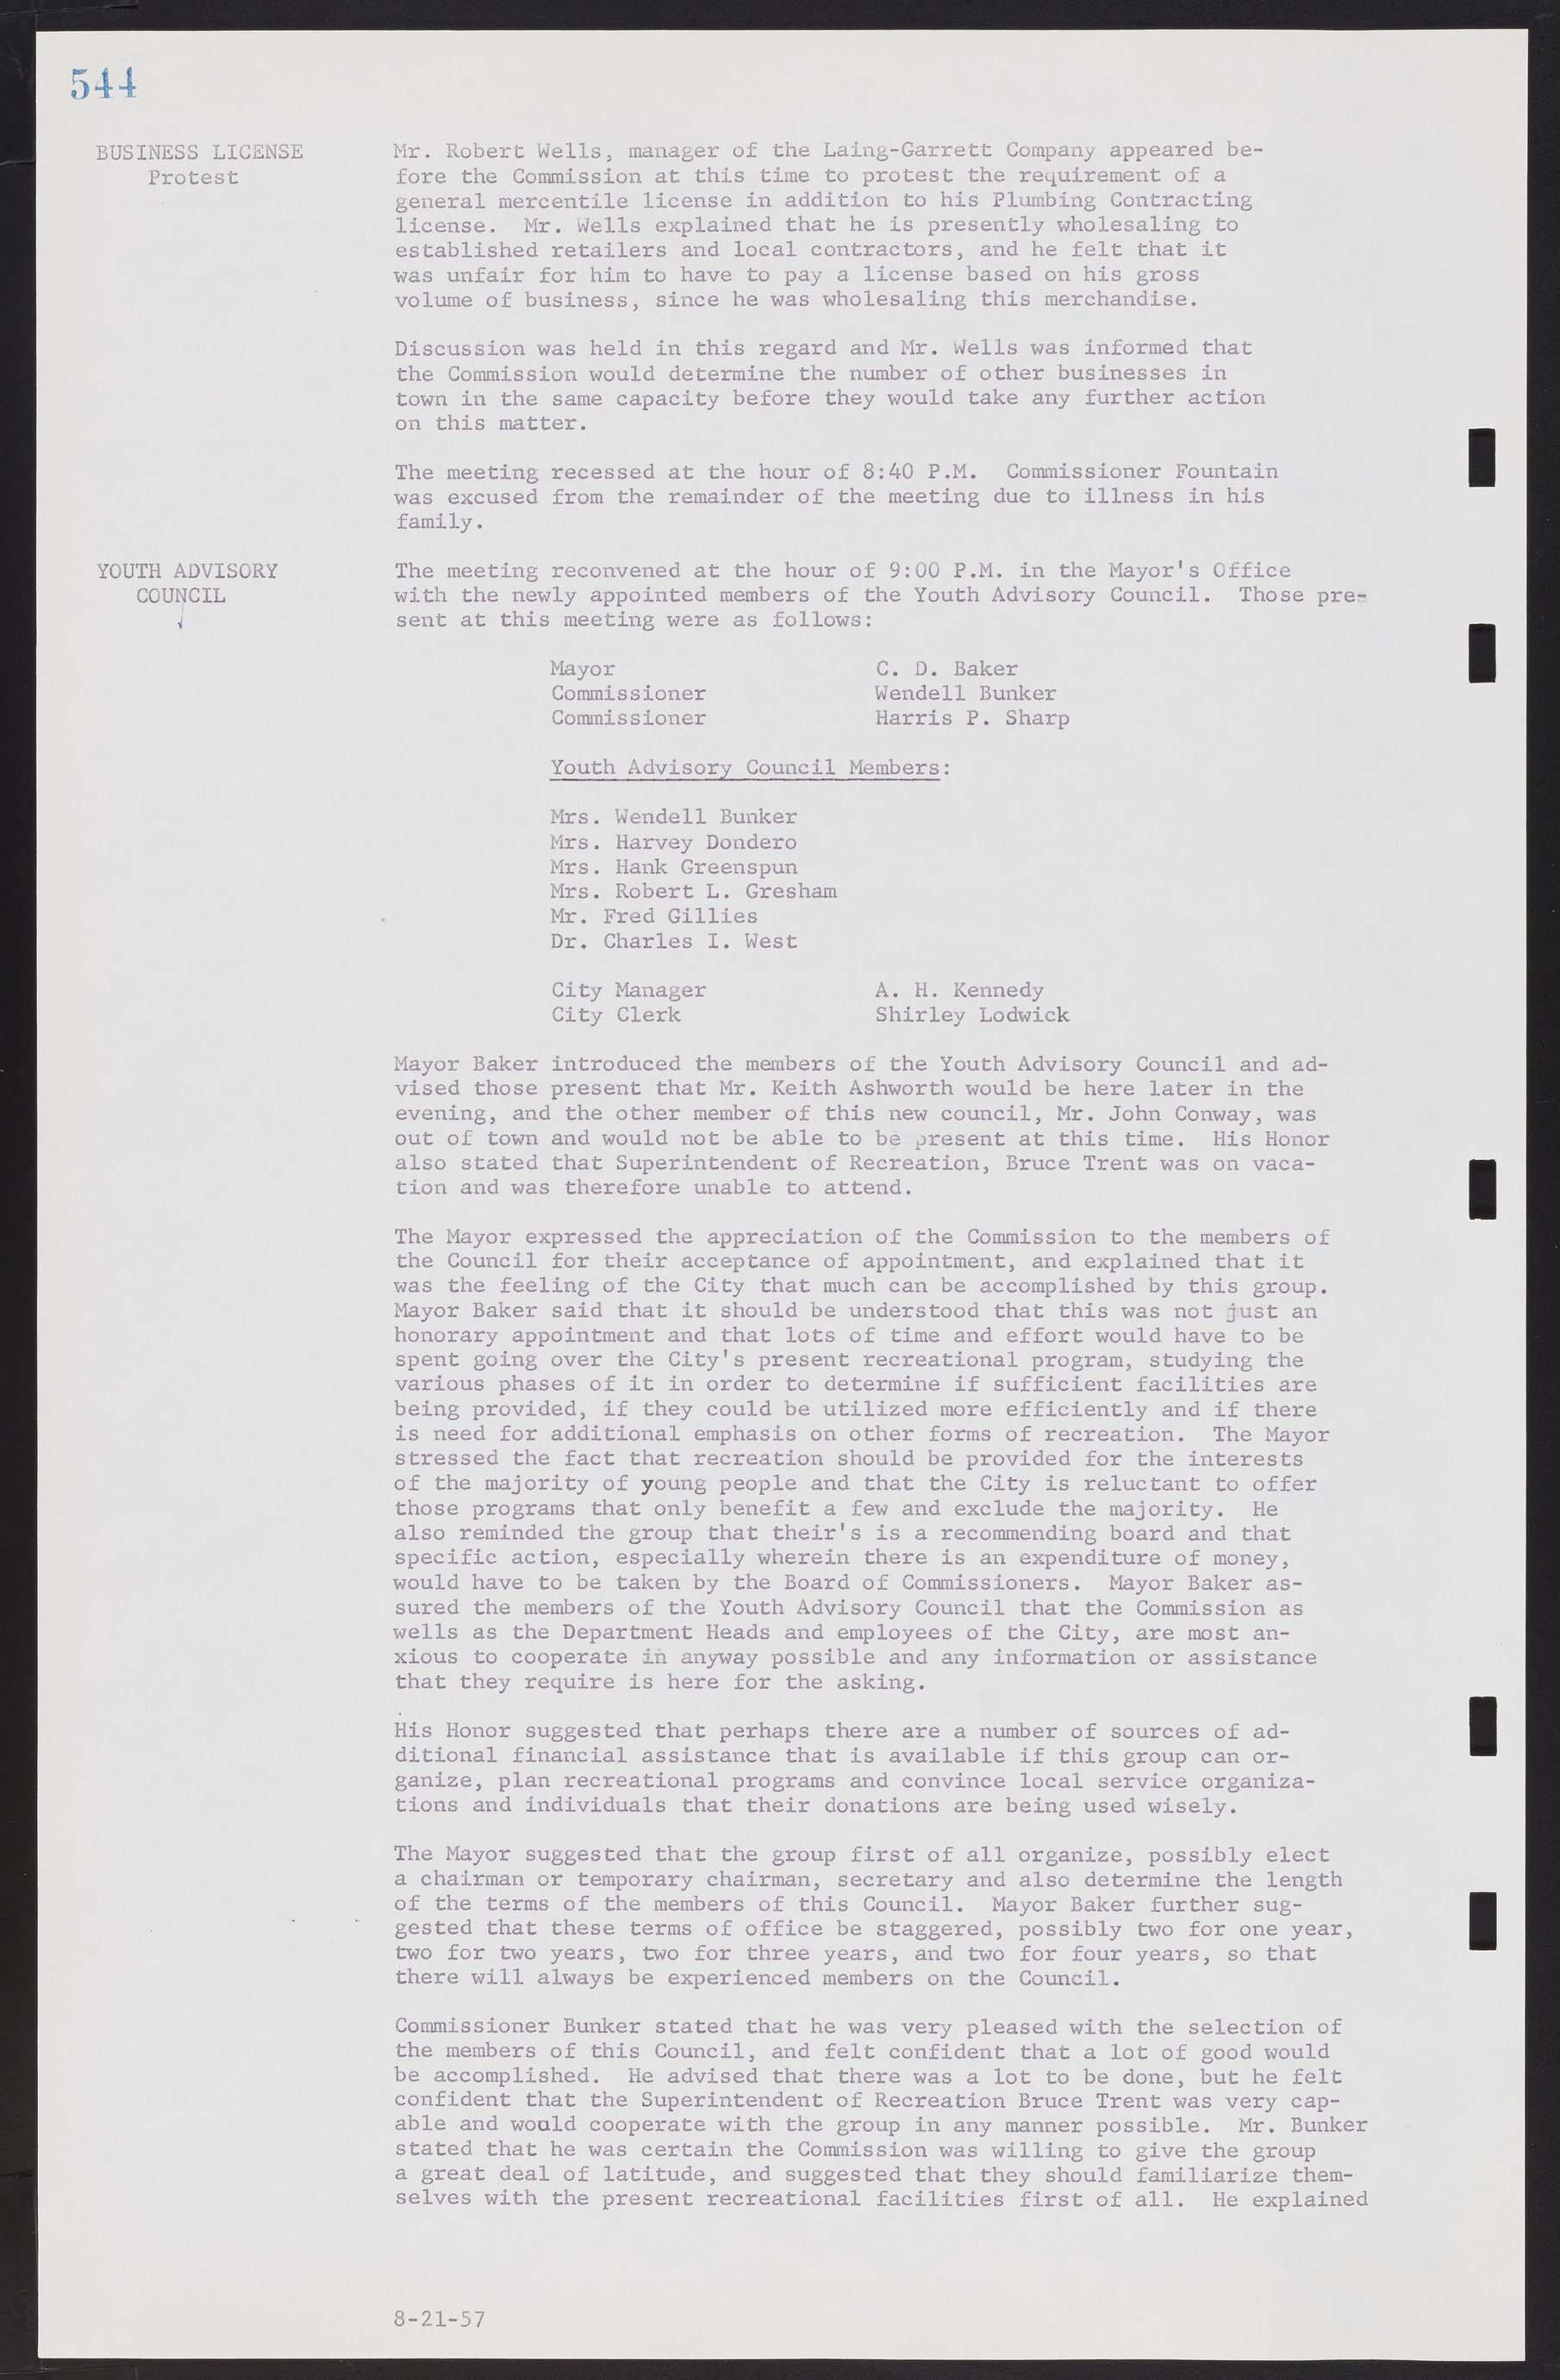 Las Vegas City Commission Minutes, September 21, 1955 to November 20, 1957, lvc000010-564